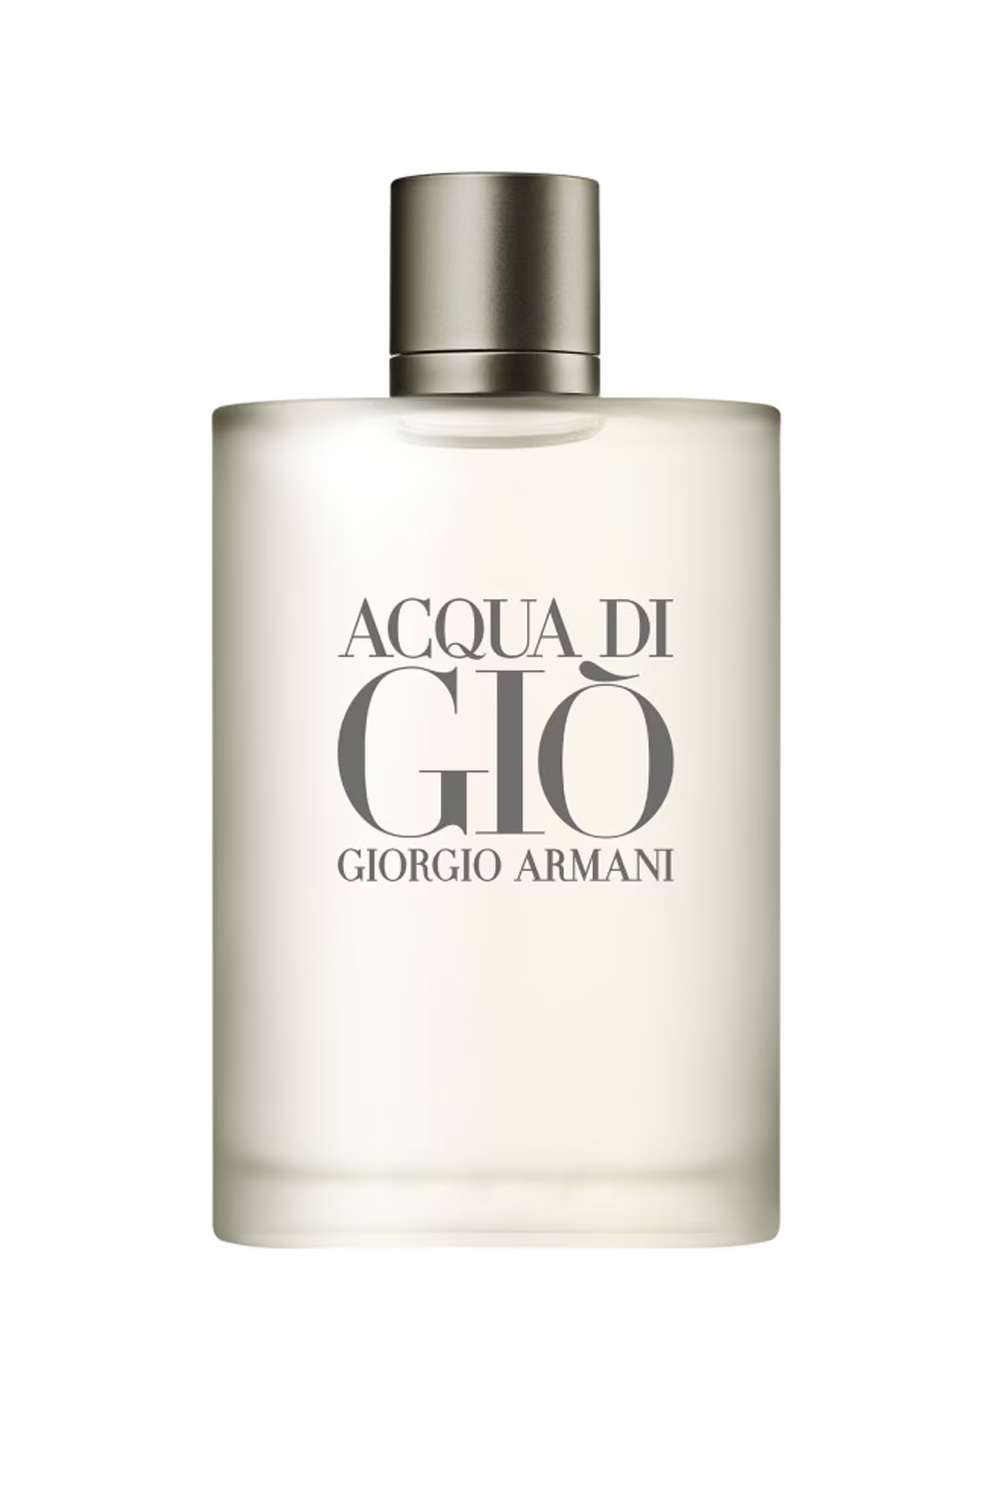 perfumes de hombre mas vendidos El Corte Ingles Acqua di Gio de Giorgio Armani